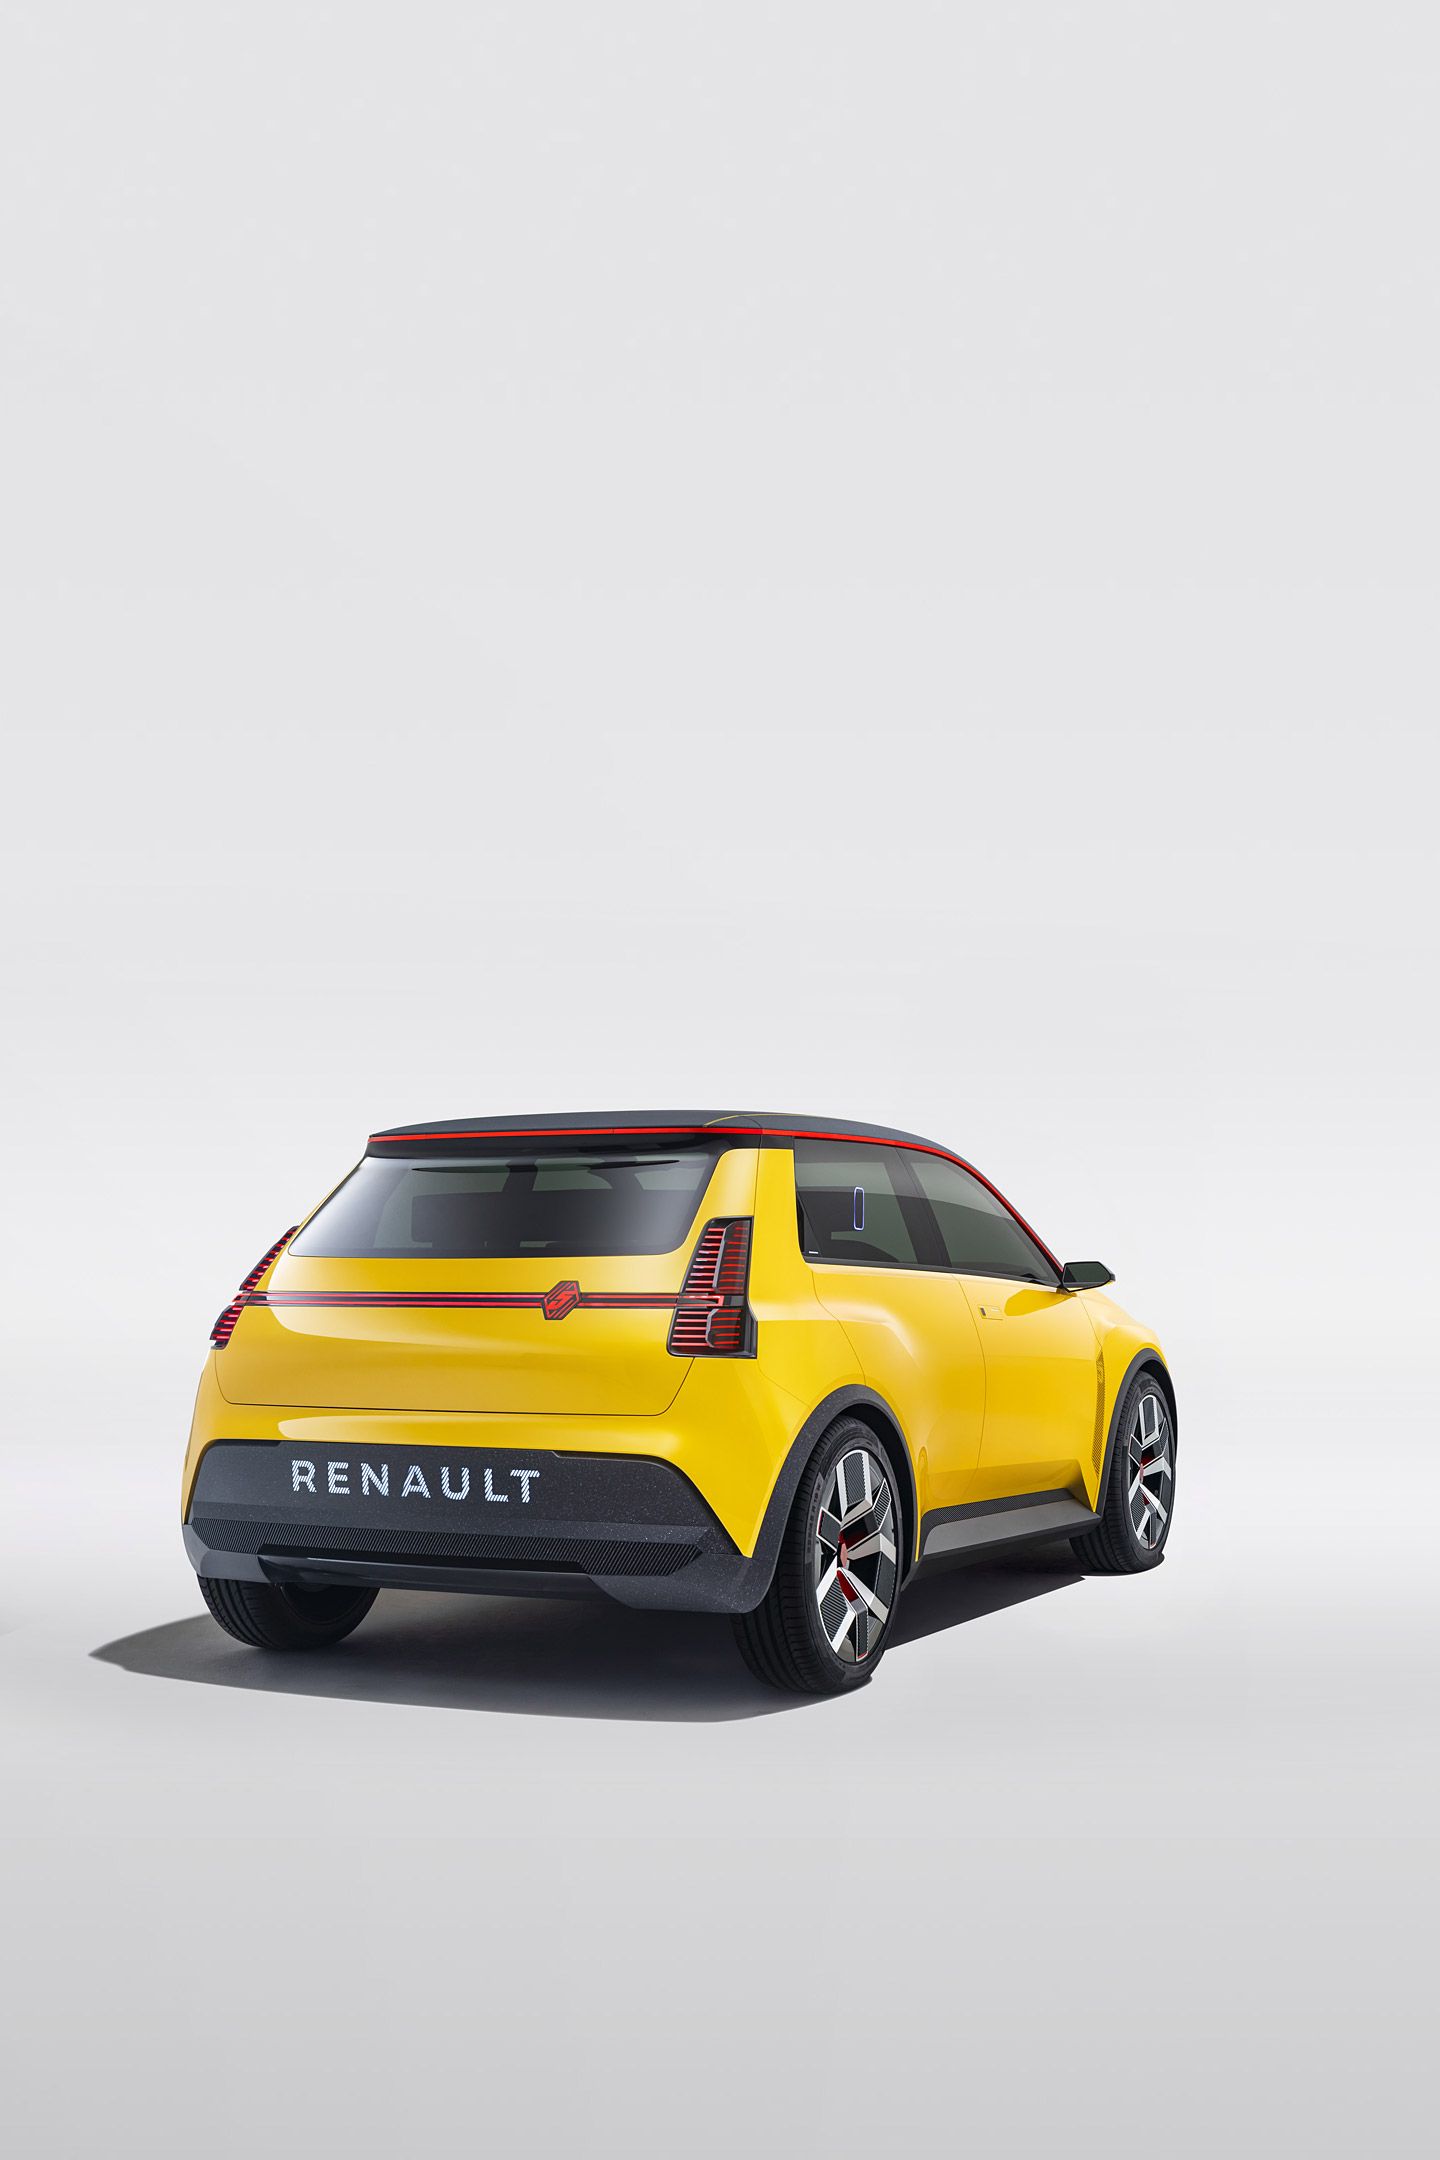 Download 2021 Renault 5 Concept Wallpaper